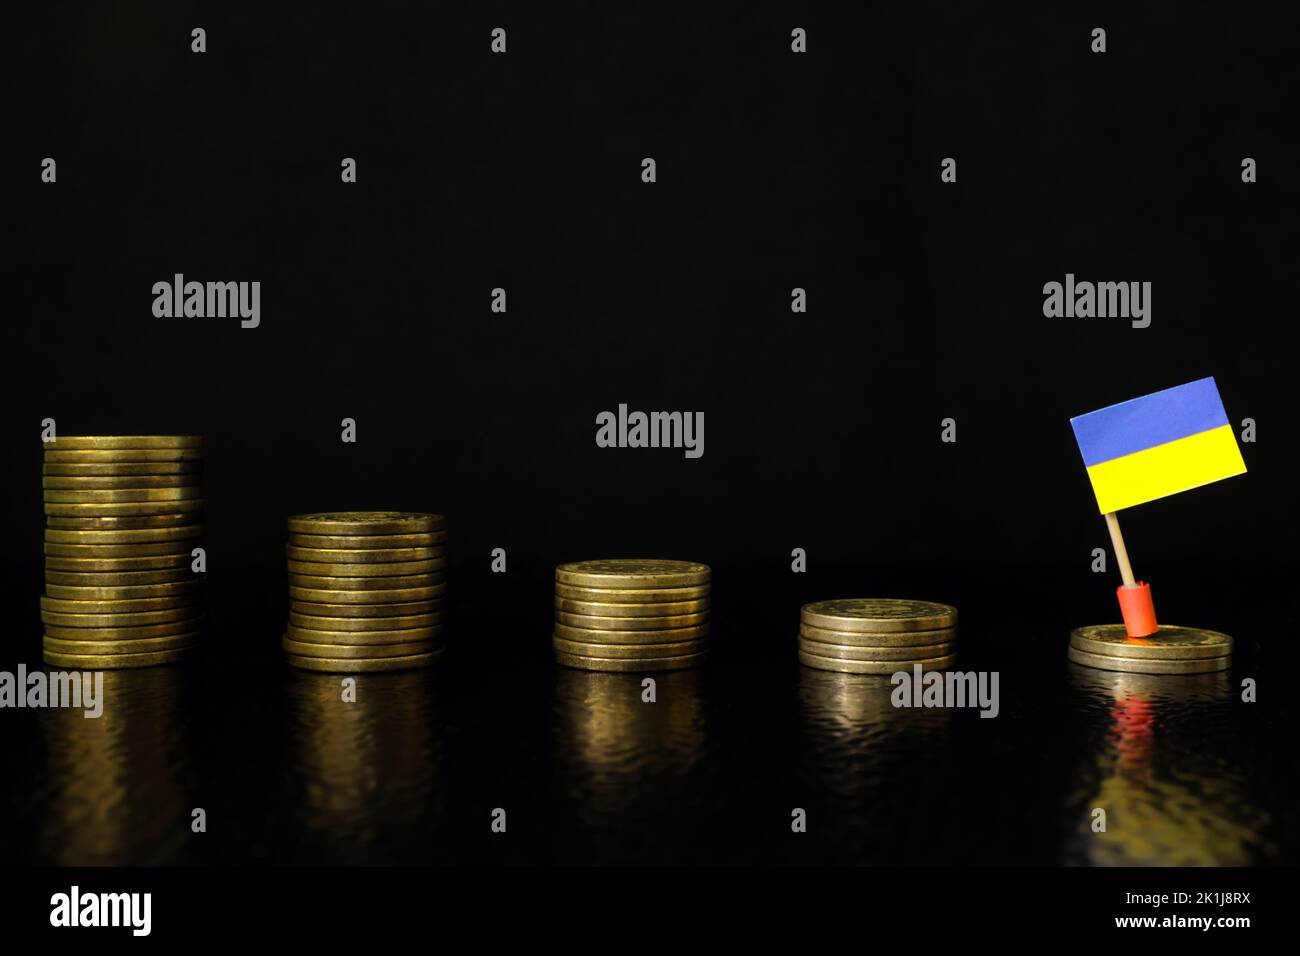 Ukraine economic recession, financial crisis and currency depreciation concept. Ukrainian flag in decreasing stack of coins in dark black background. Stock Photo